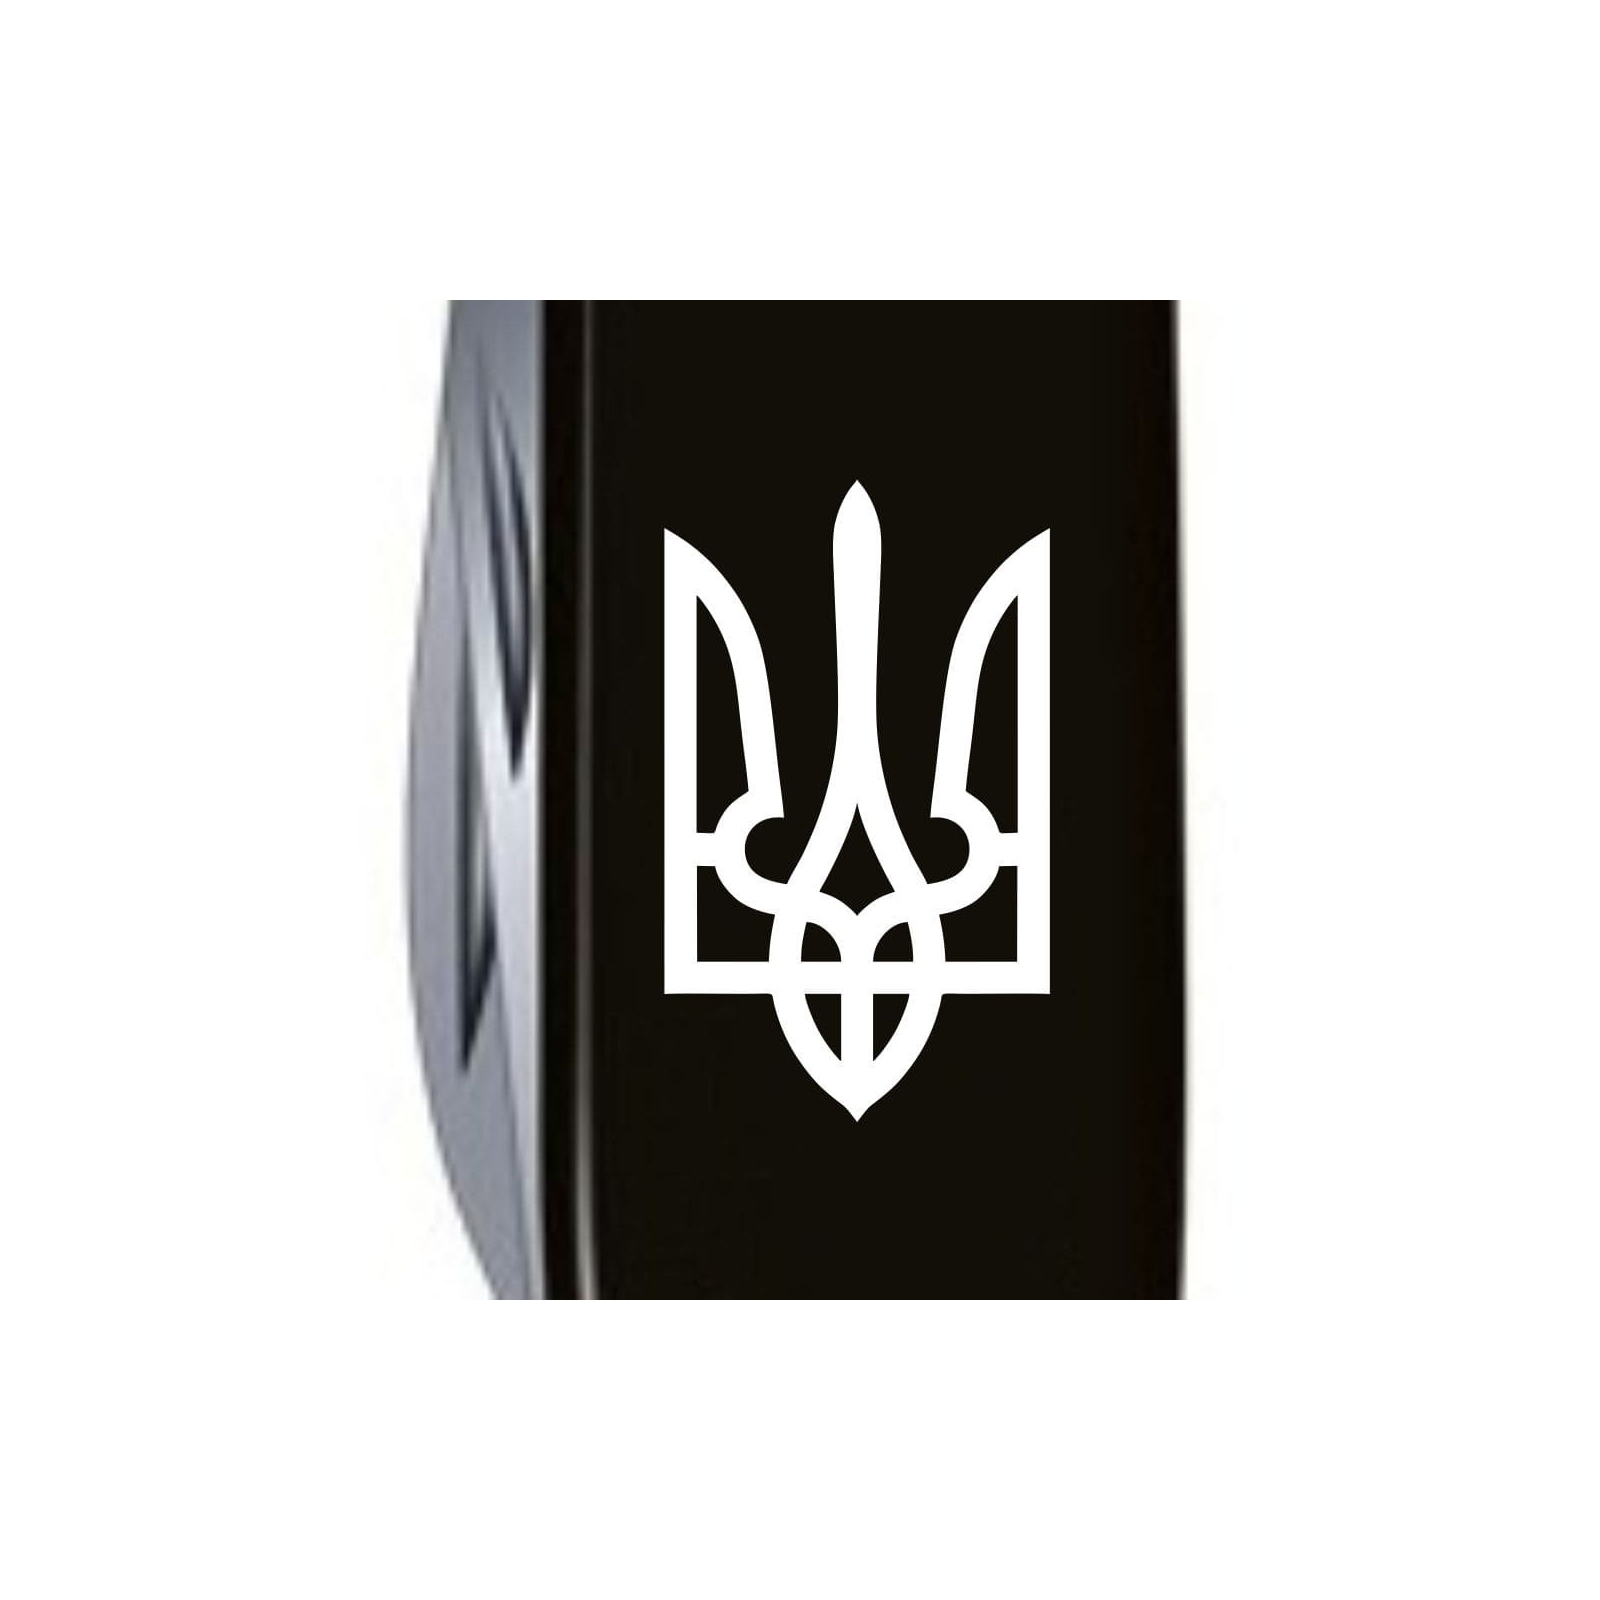 Нож Victorinox Huntsman Ukraine Black "Карта України Жовто-Блакитна" (1.3713.3_T1166u) изображение 4